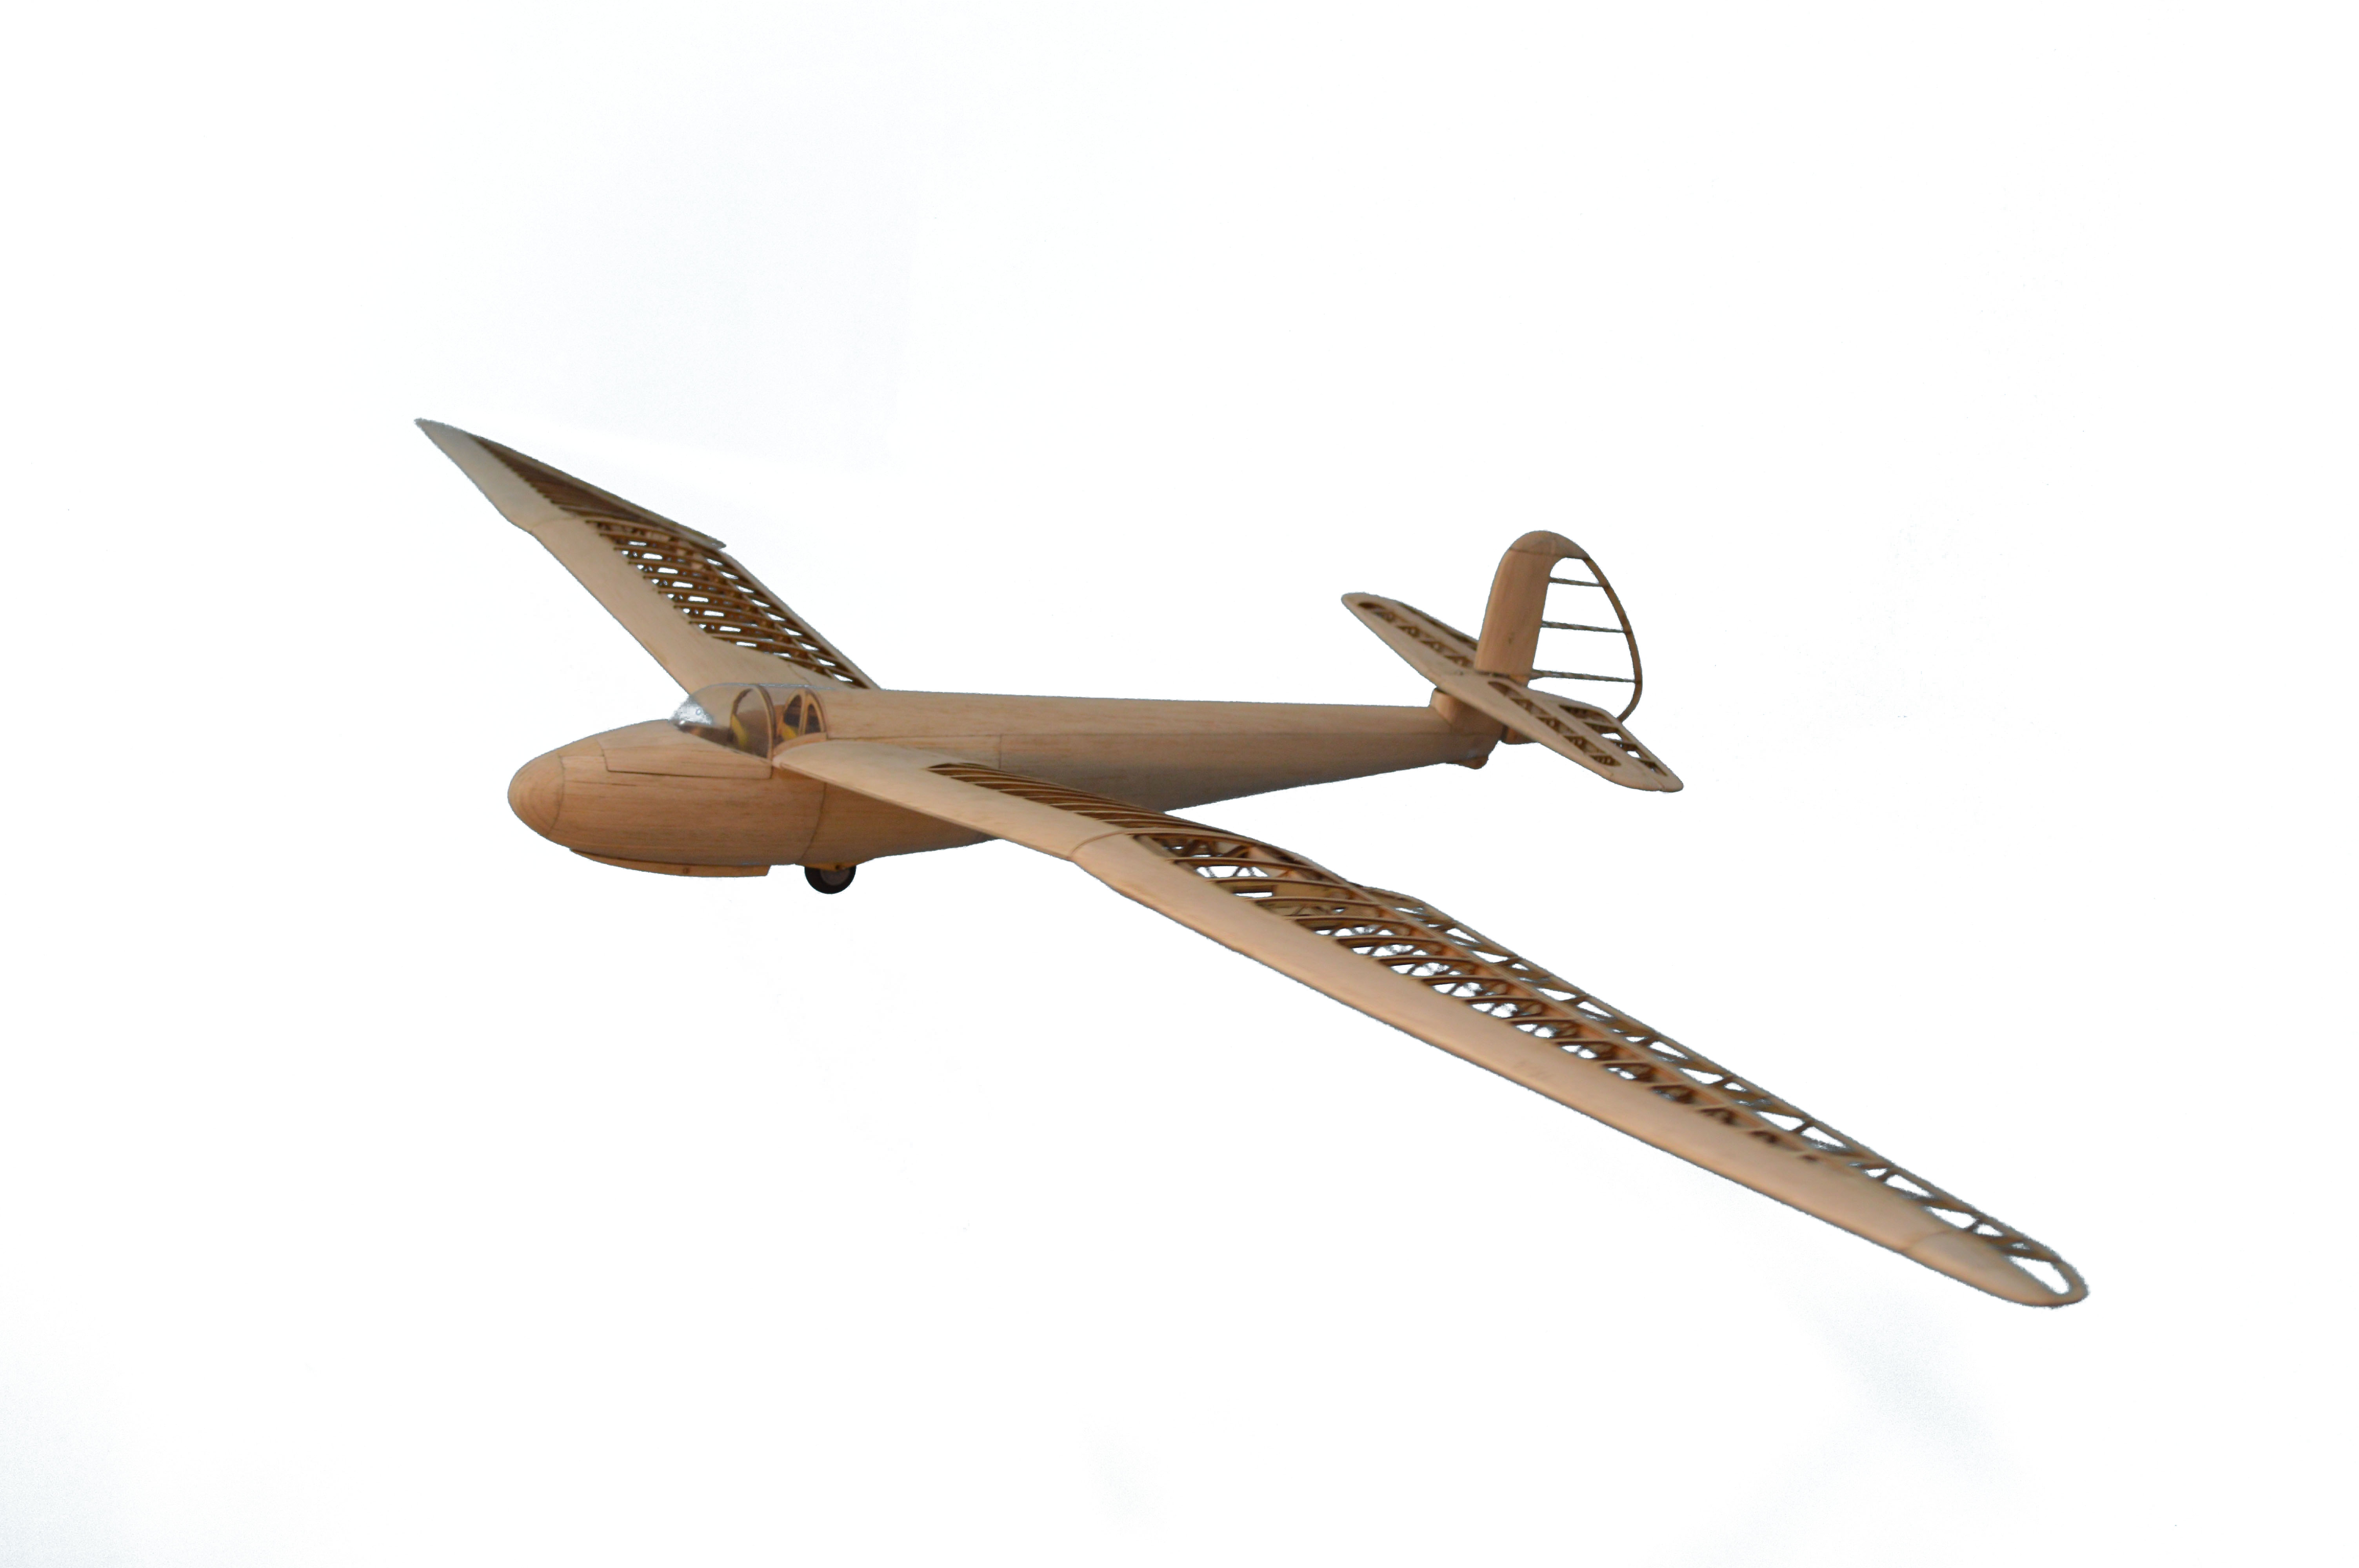 Tony-Rays-AeroModel-Minimoa-1422mm-Wingspan-112-Scale-Balsa-Wood-Laser-Cut-RC-Airplane-Glider-KIT-1802443-2